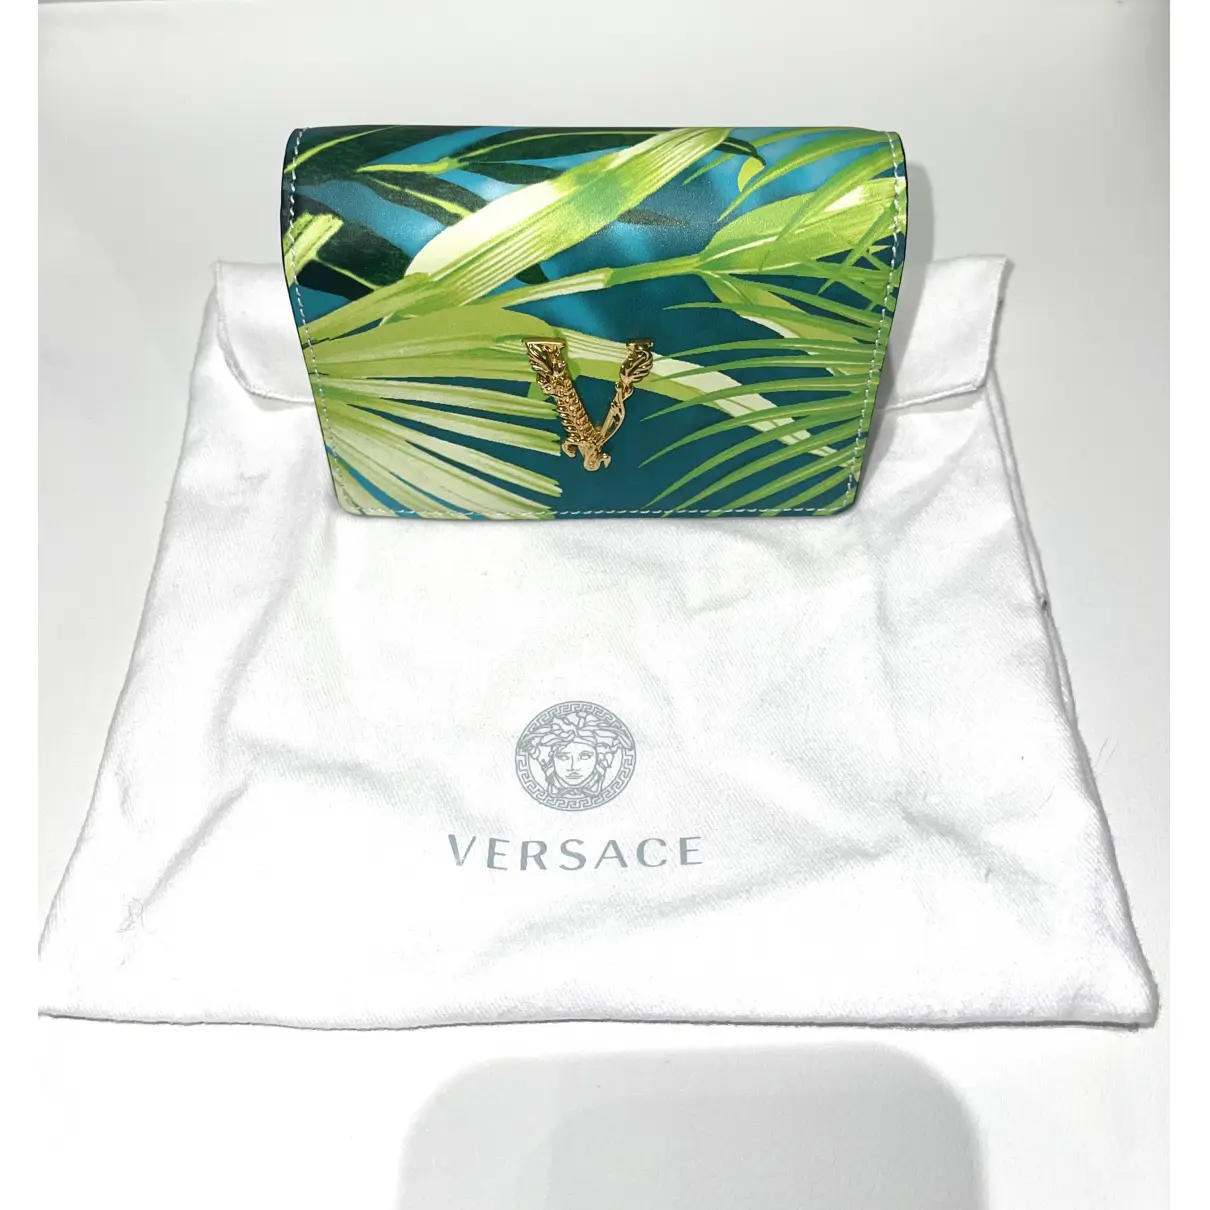 Virtus leather bag Versace